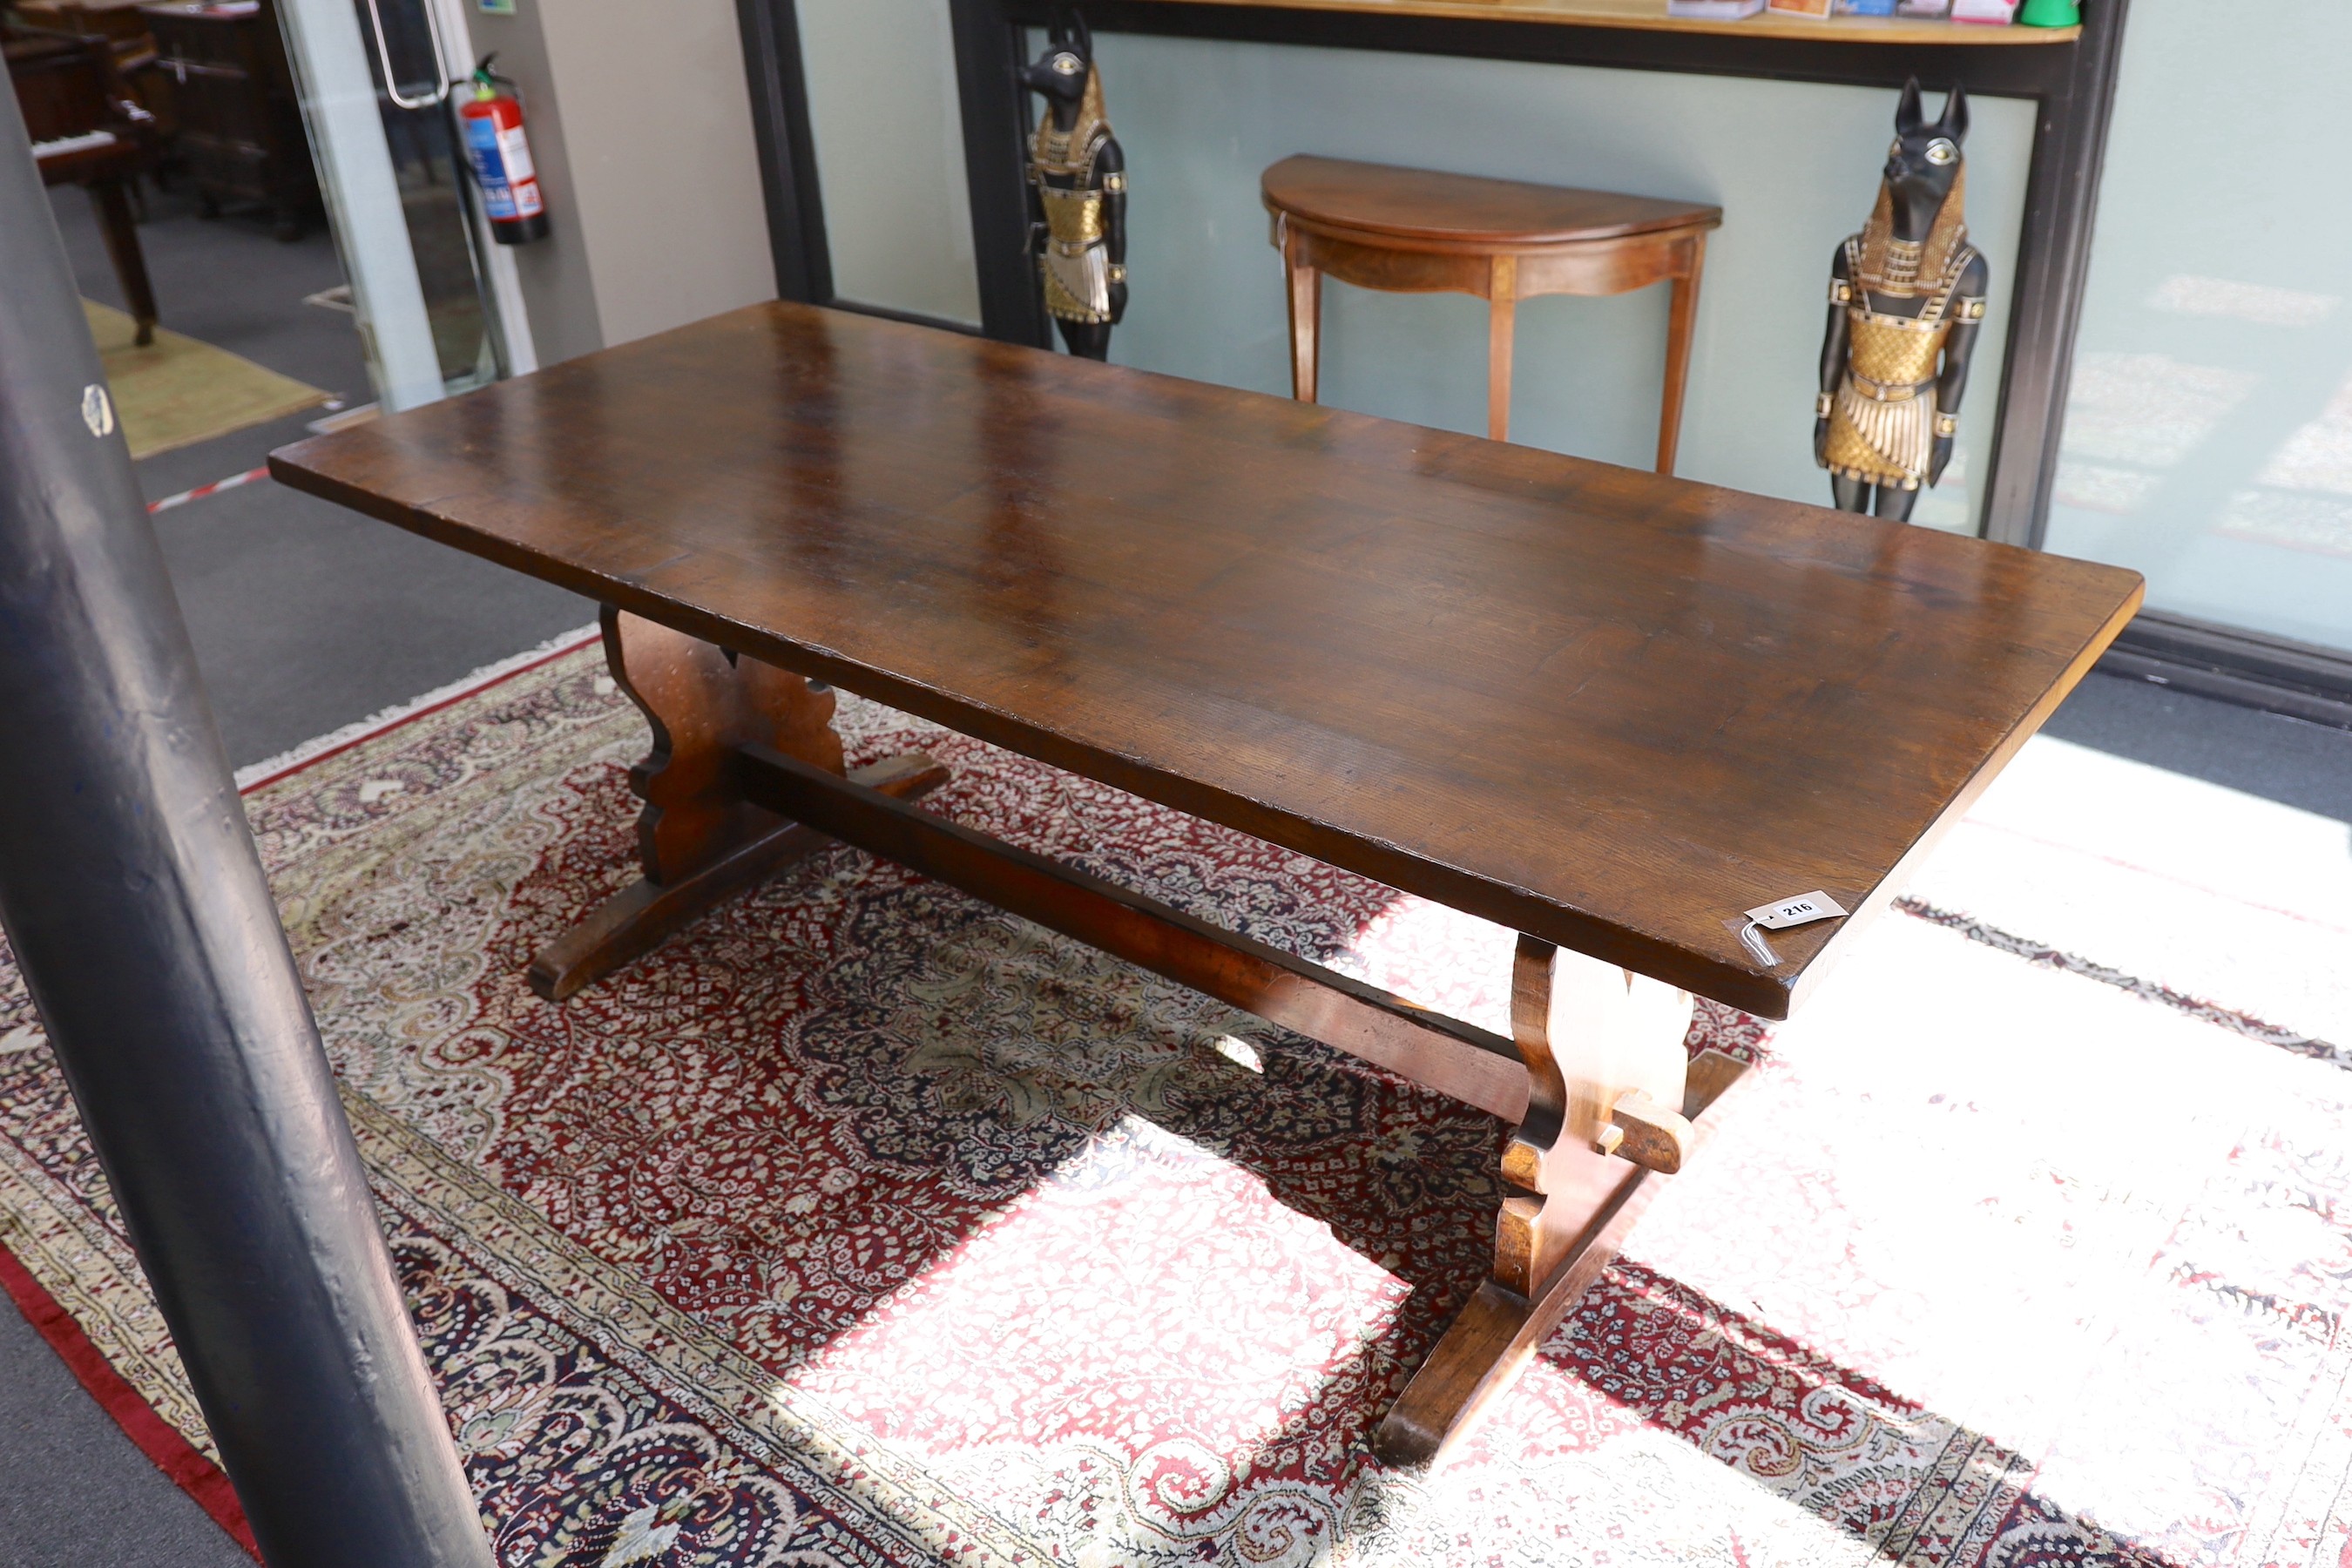 A Titchmarsh and Godwin rectangular oak refectory dining table, length 213cm, width 90cm, height 78cm